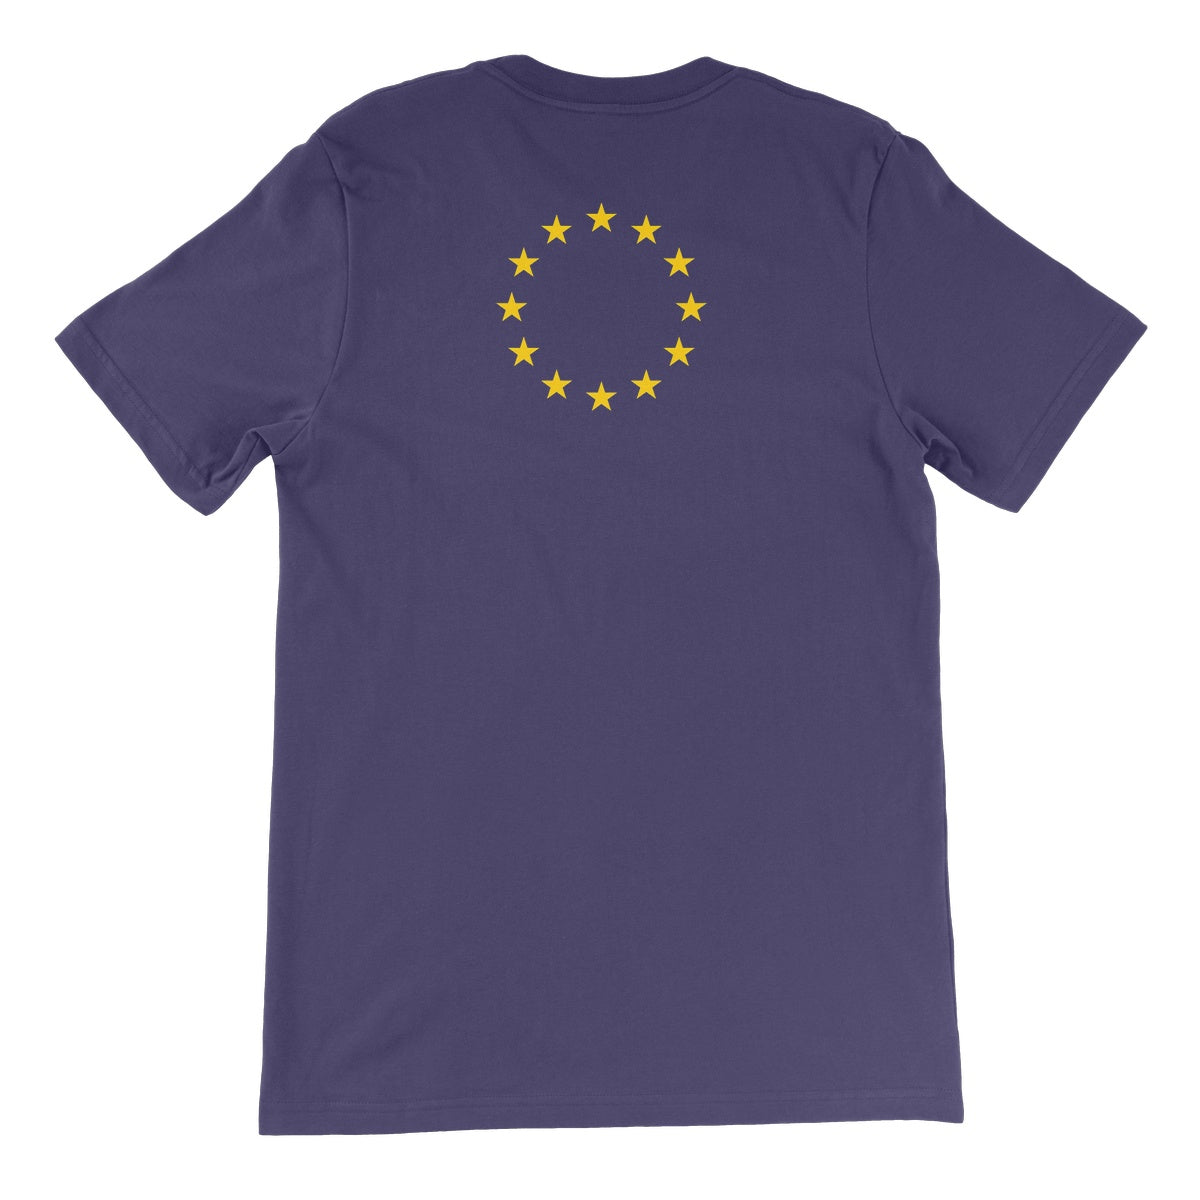 Brexit sUKs Unisex Short Sleeve T-Shirt